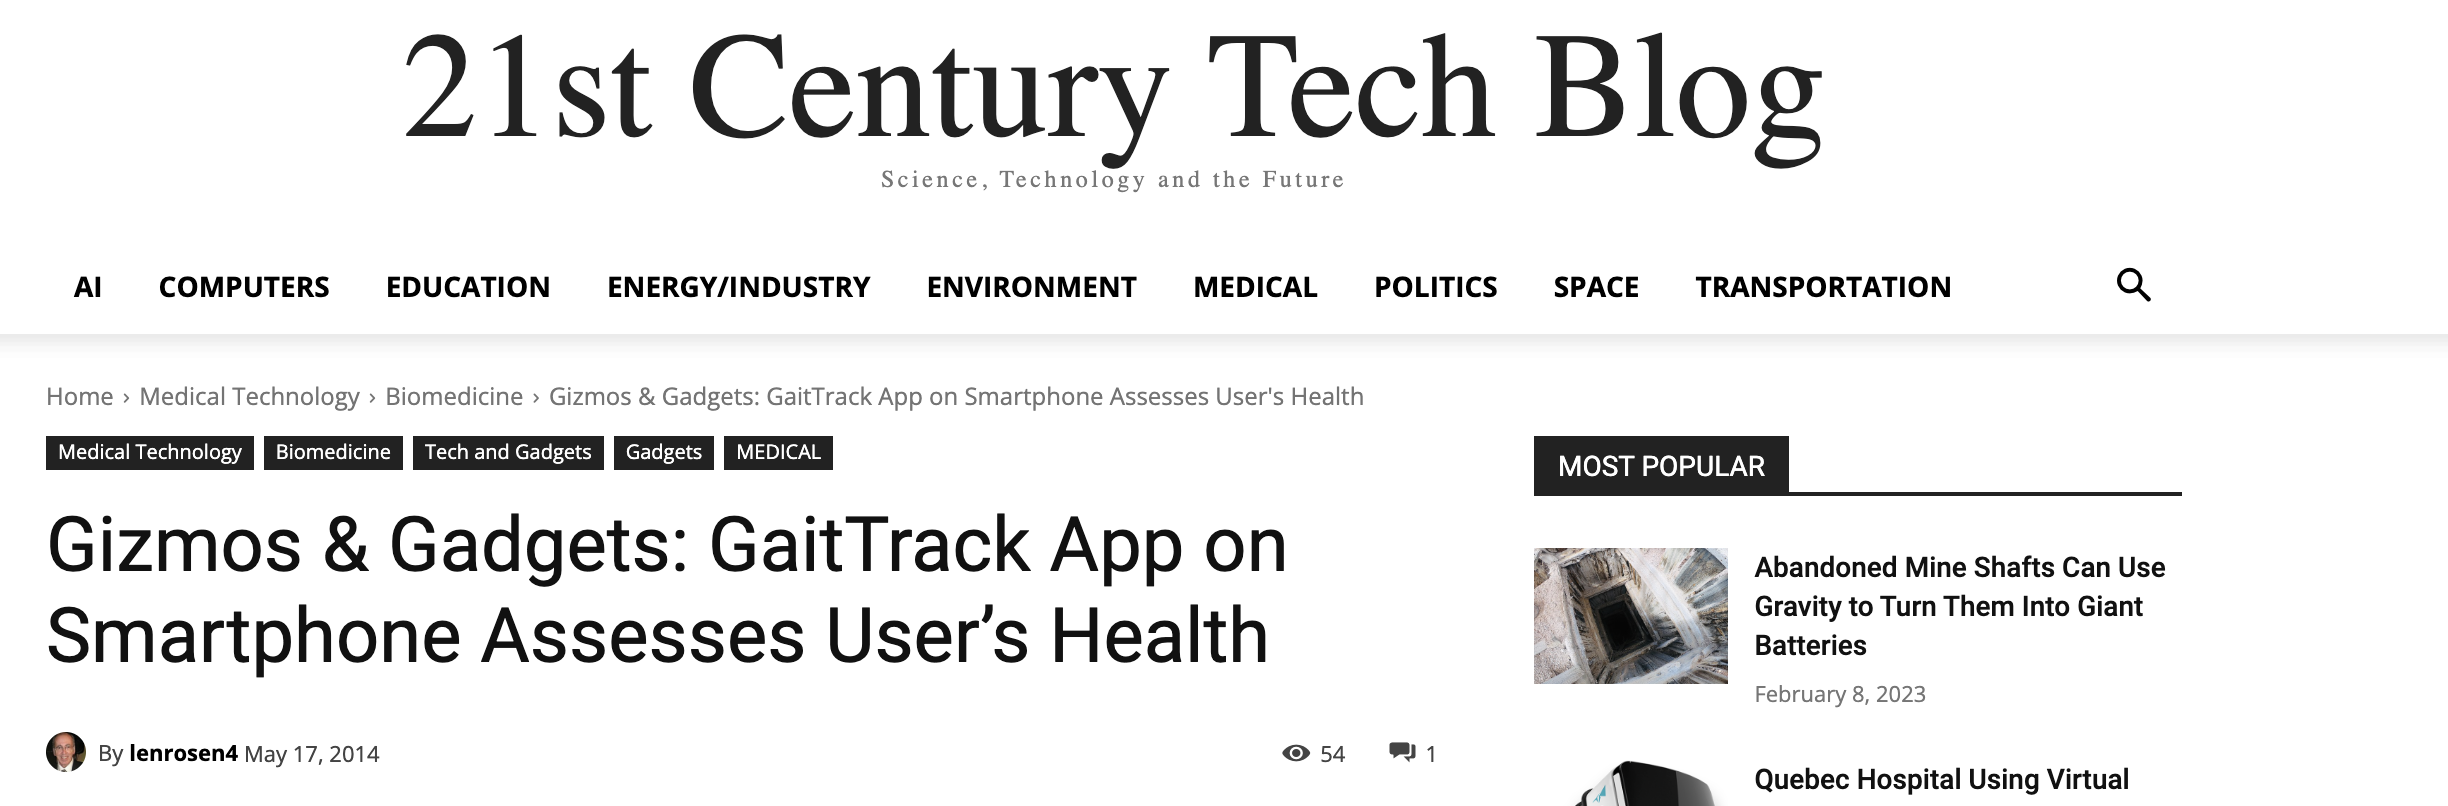 Gizmos & Gadgets: GaitTrack App on Smartphone Assesses User’s Health, 21st Century Tech Blog